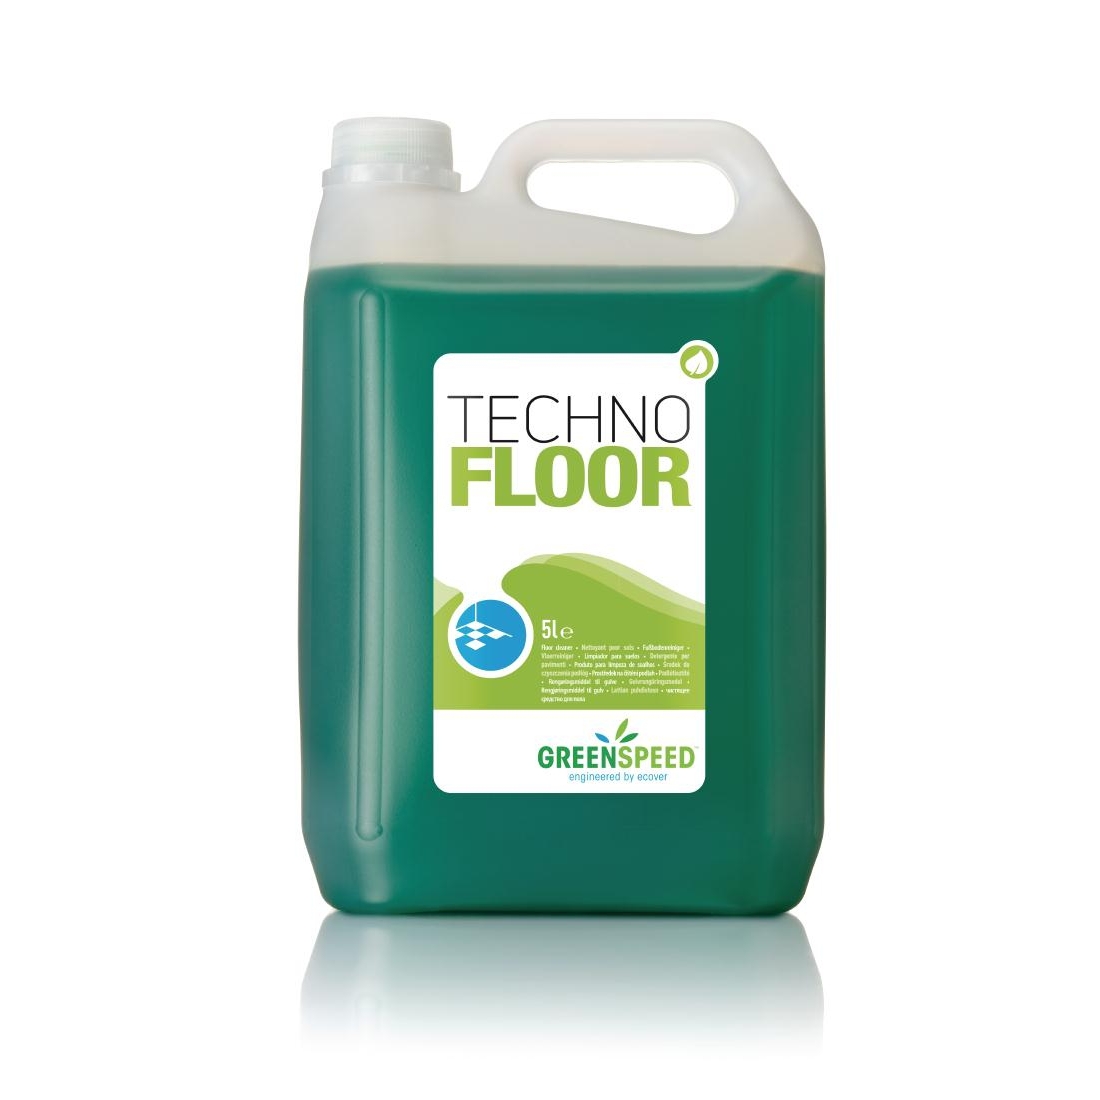 Ecover Techno Floor Cleaner 5 Litre (Pack of 4)